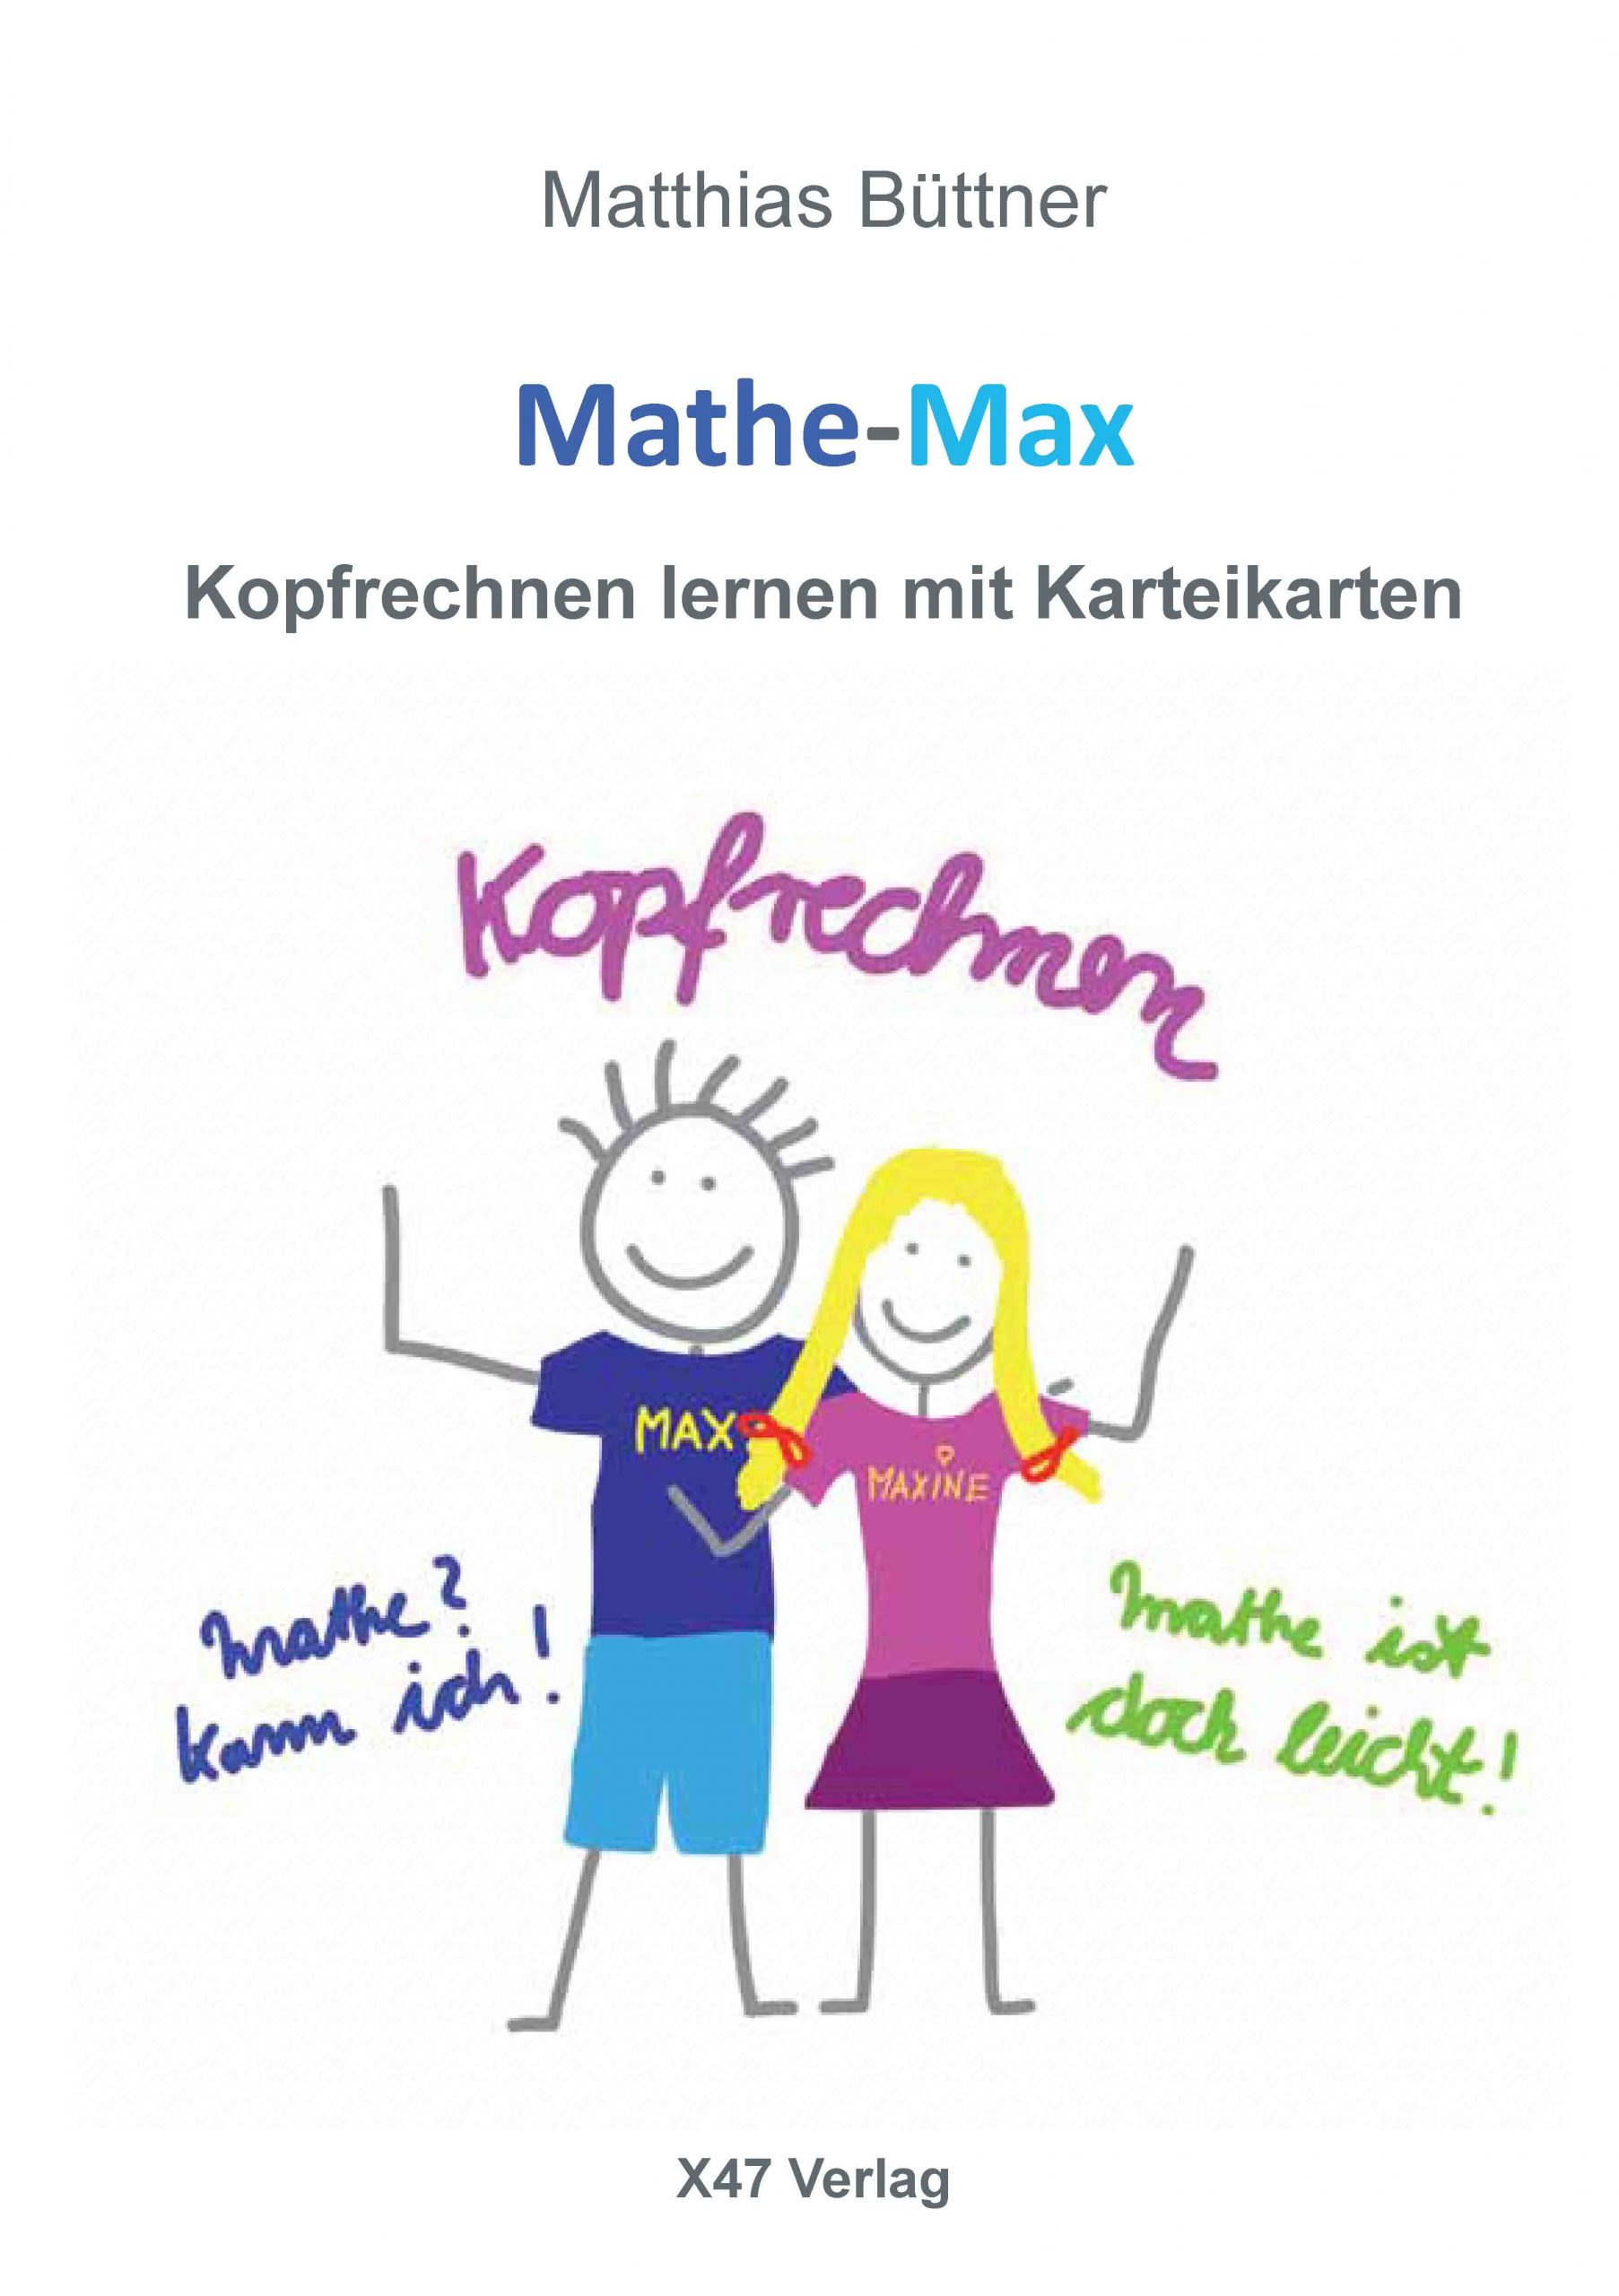 Matthias-Buettner-Mathe-Max-